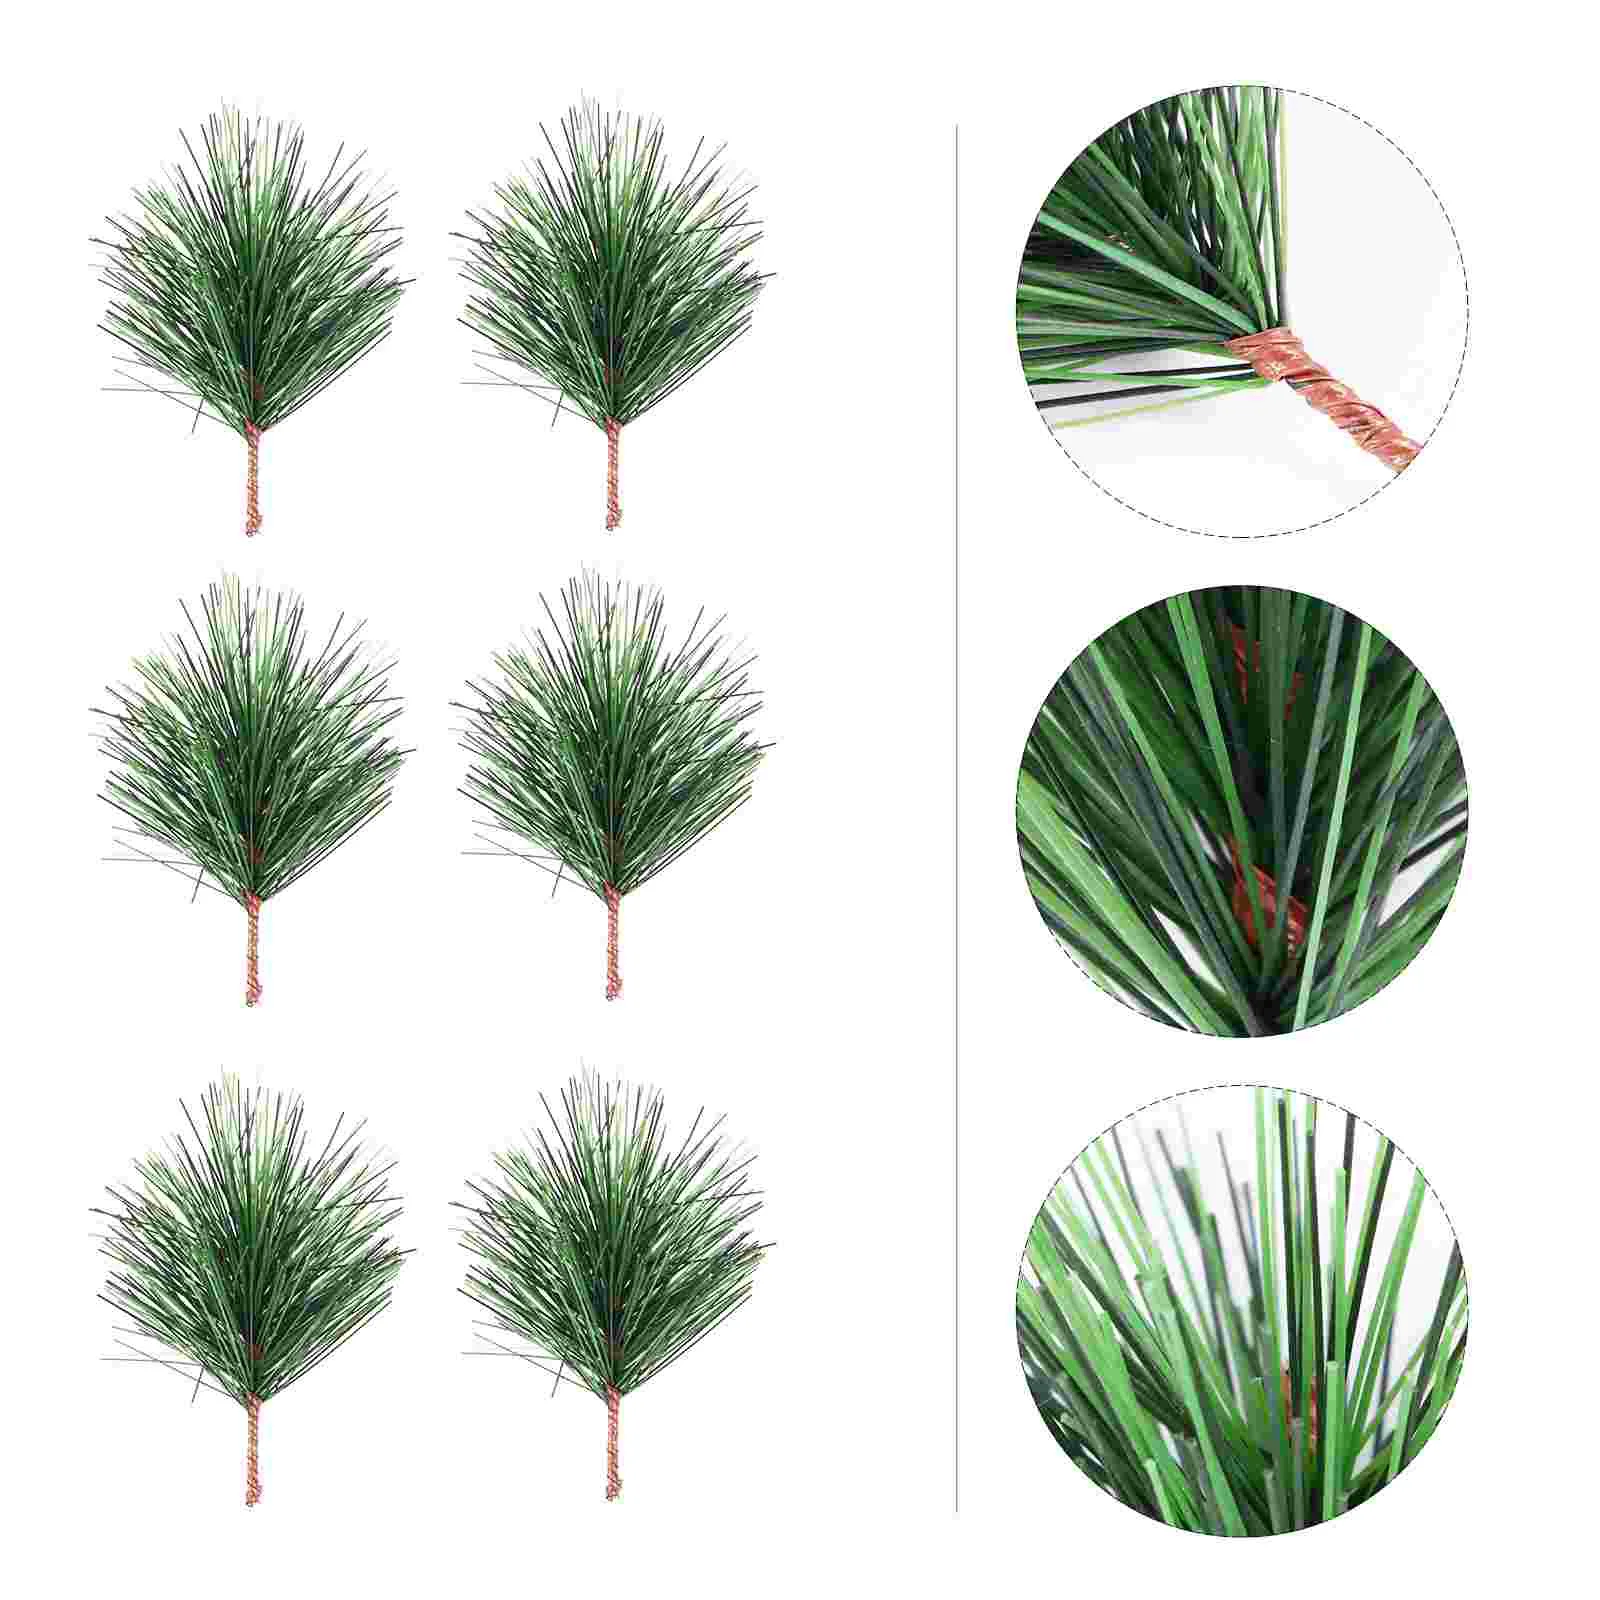 

24Pcs Creative Pine Picks Novelty Simulation Christmas Pine Branches Decors